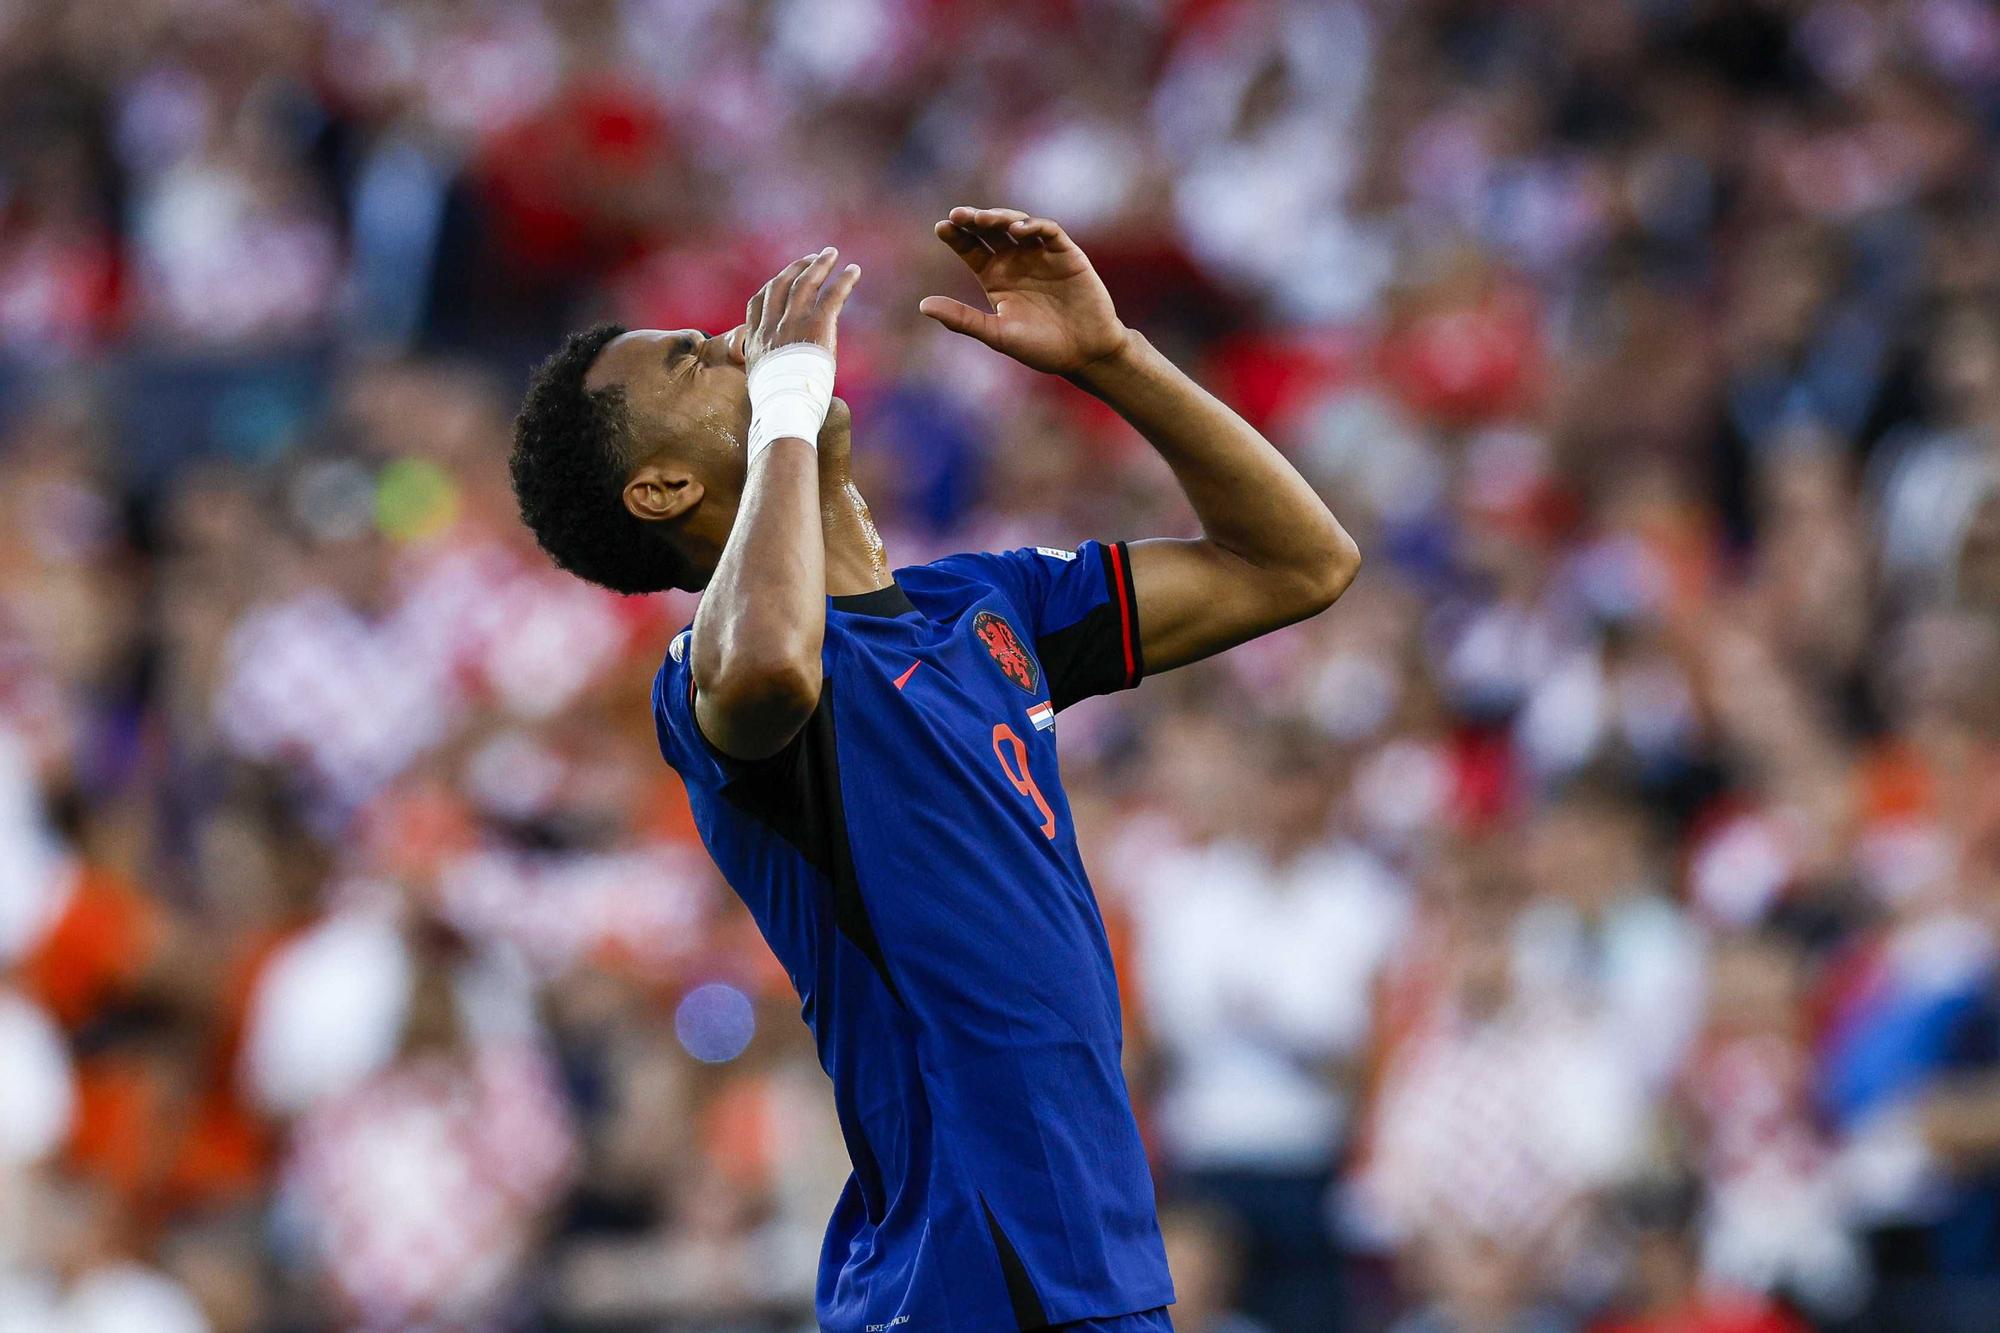 UEFA Nations League semi-final - Netherlands vs Croatia